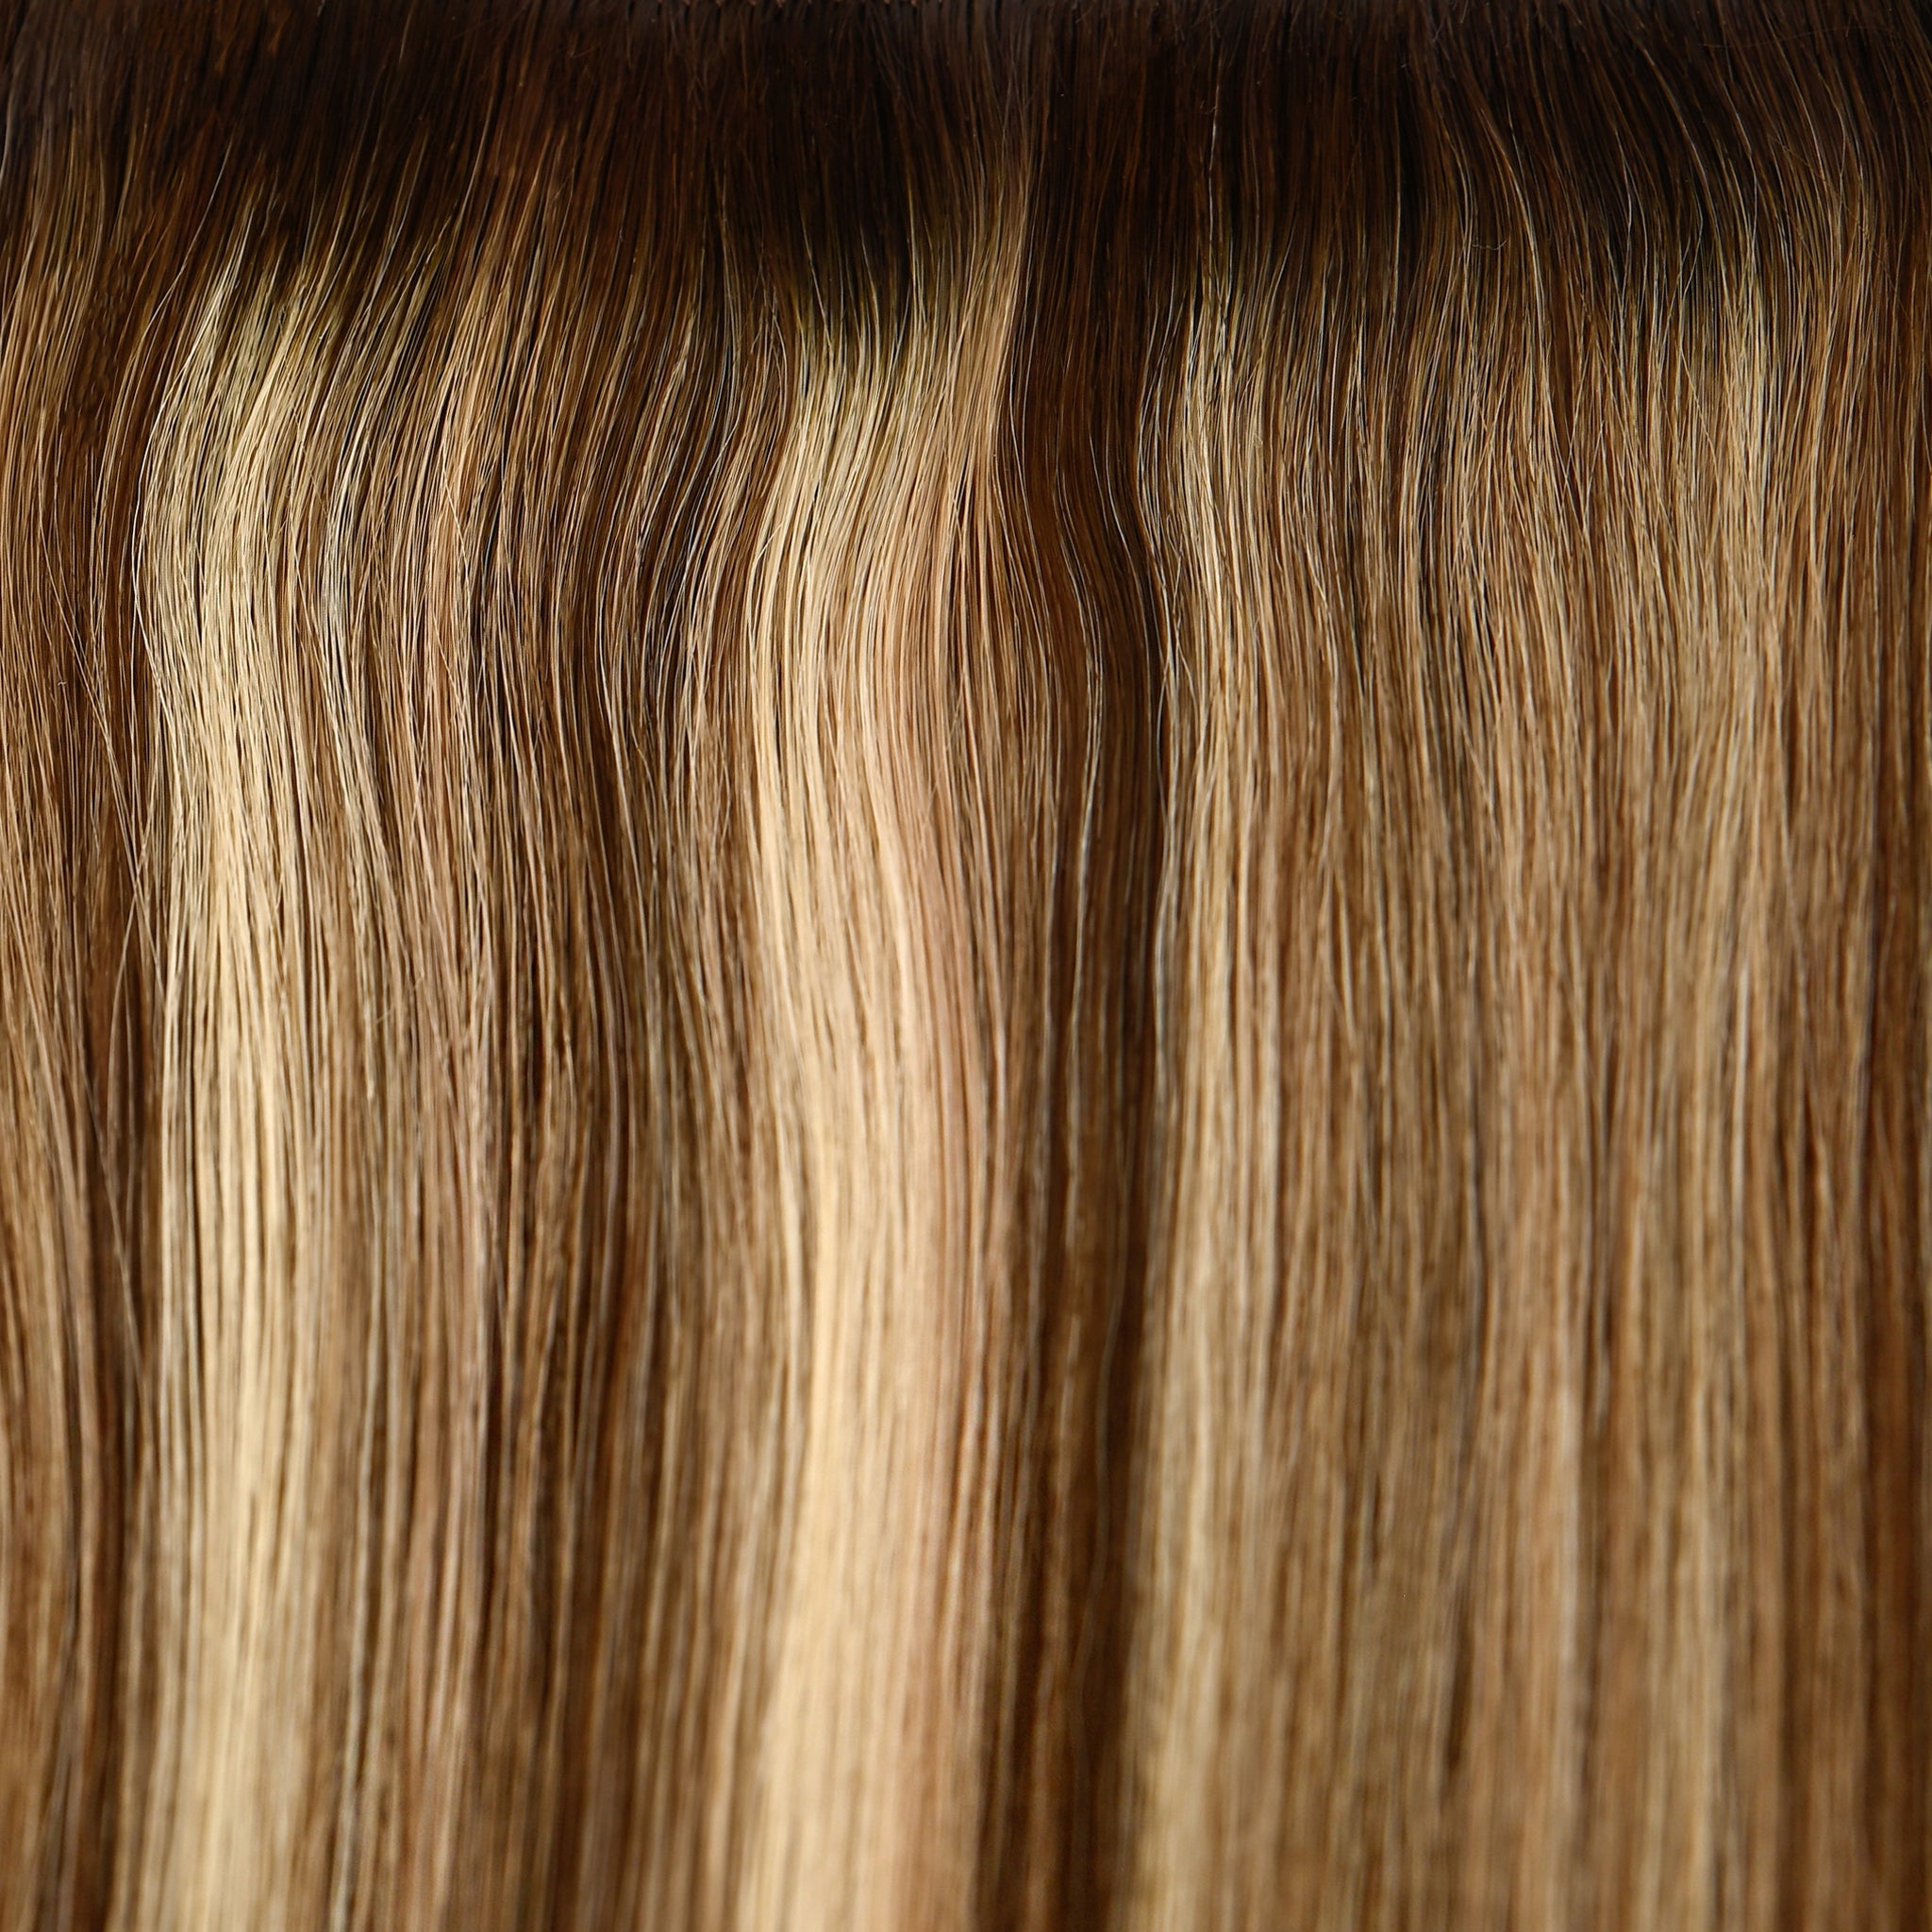 Medium Brown Beige Blonde 'Echo' Root Tap Blend Ultra Narrow Clip In Hair Extensions